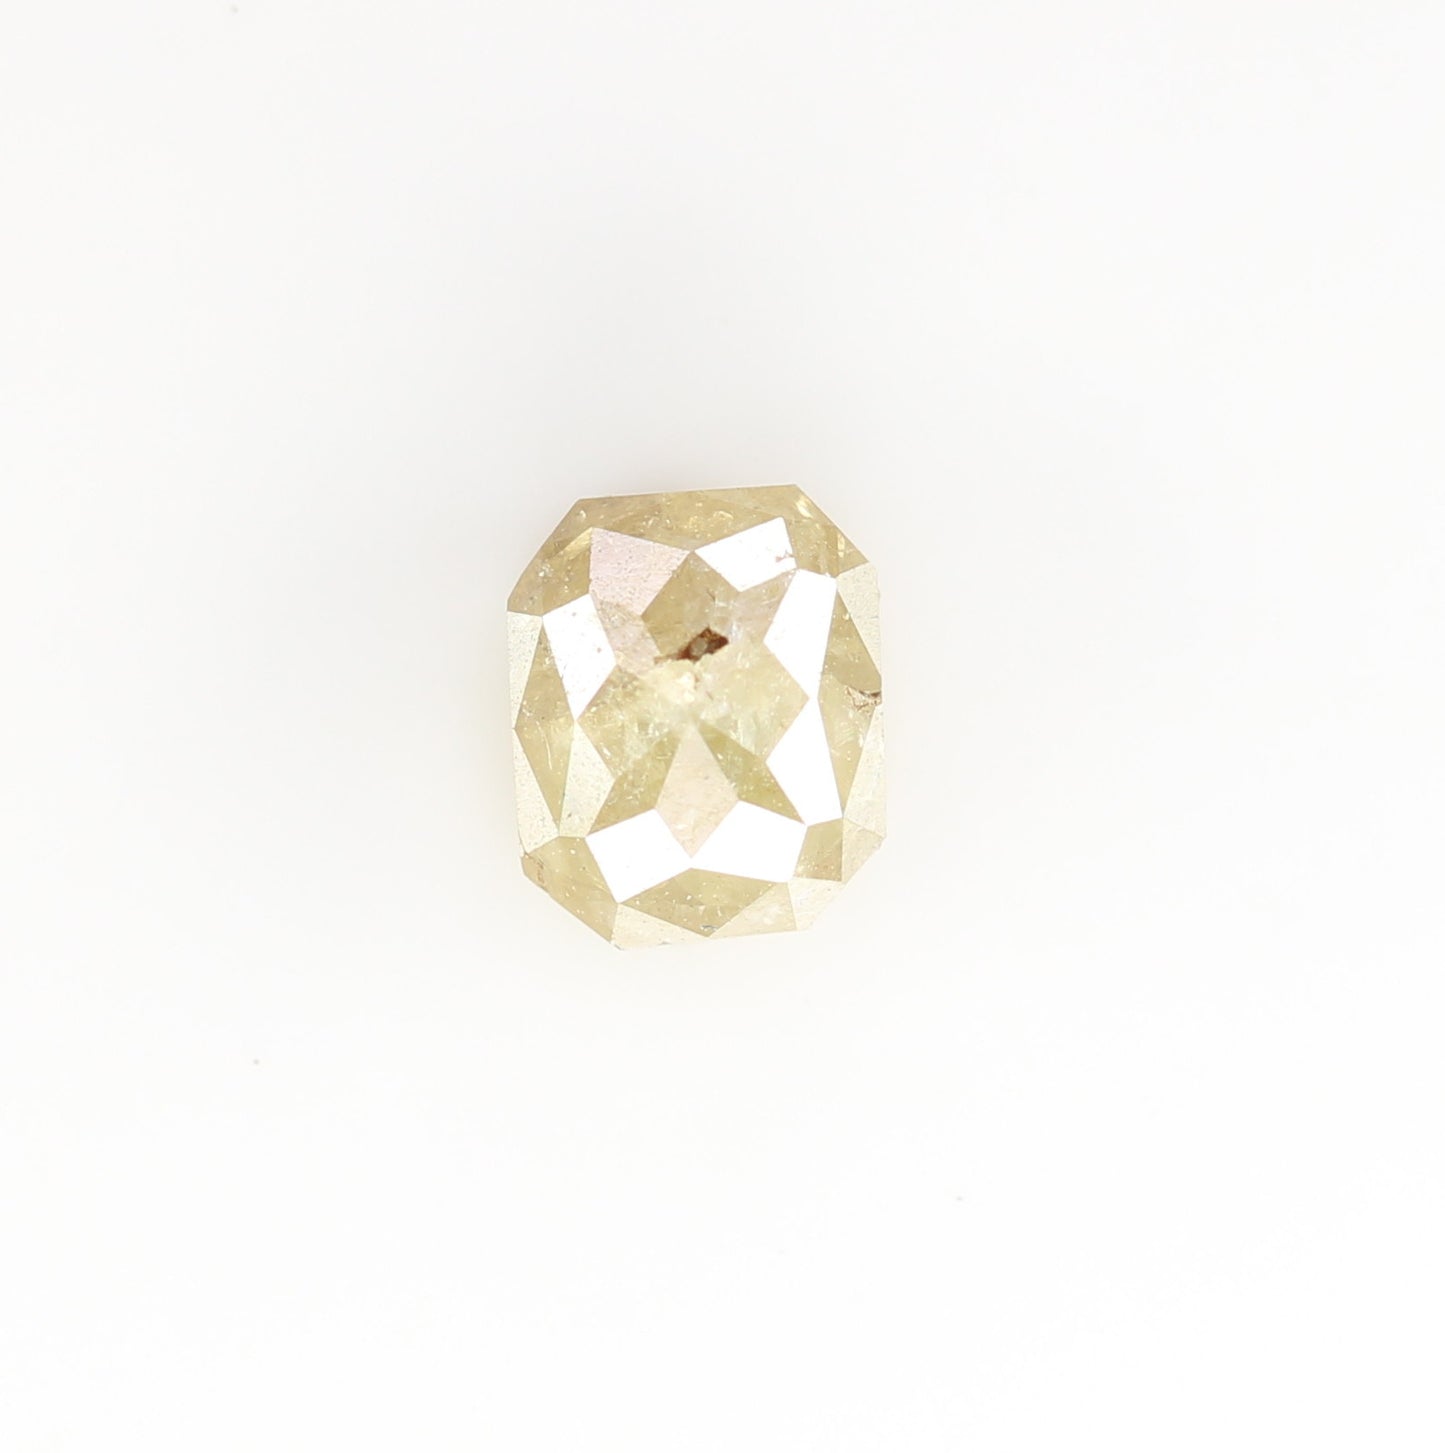 0.73 CT Light Yellow Cushion Shape Diamond For Girlfriend Gift Ring | Customize Yellow Cushion Diamond